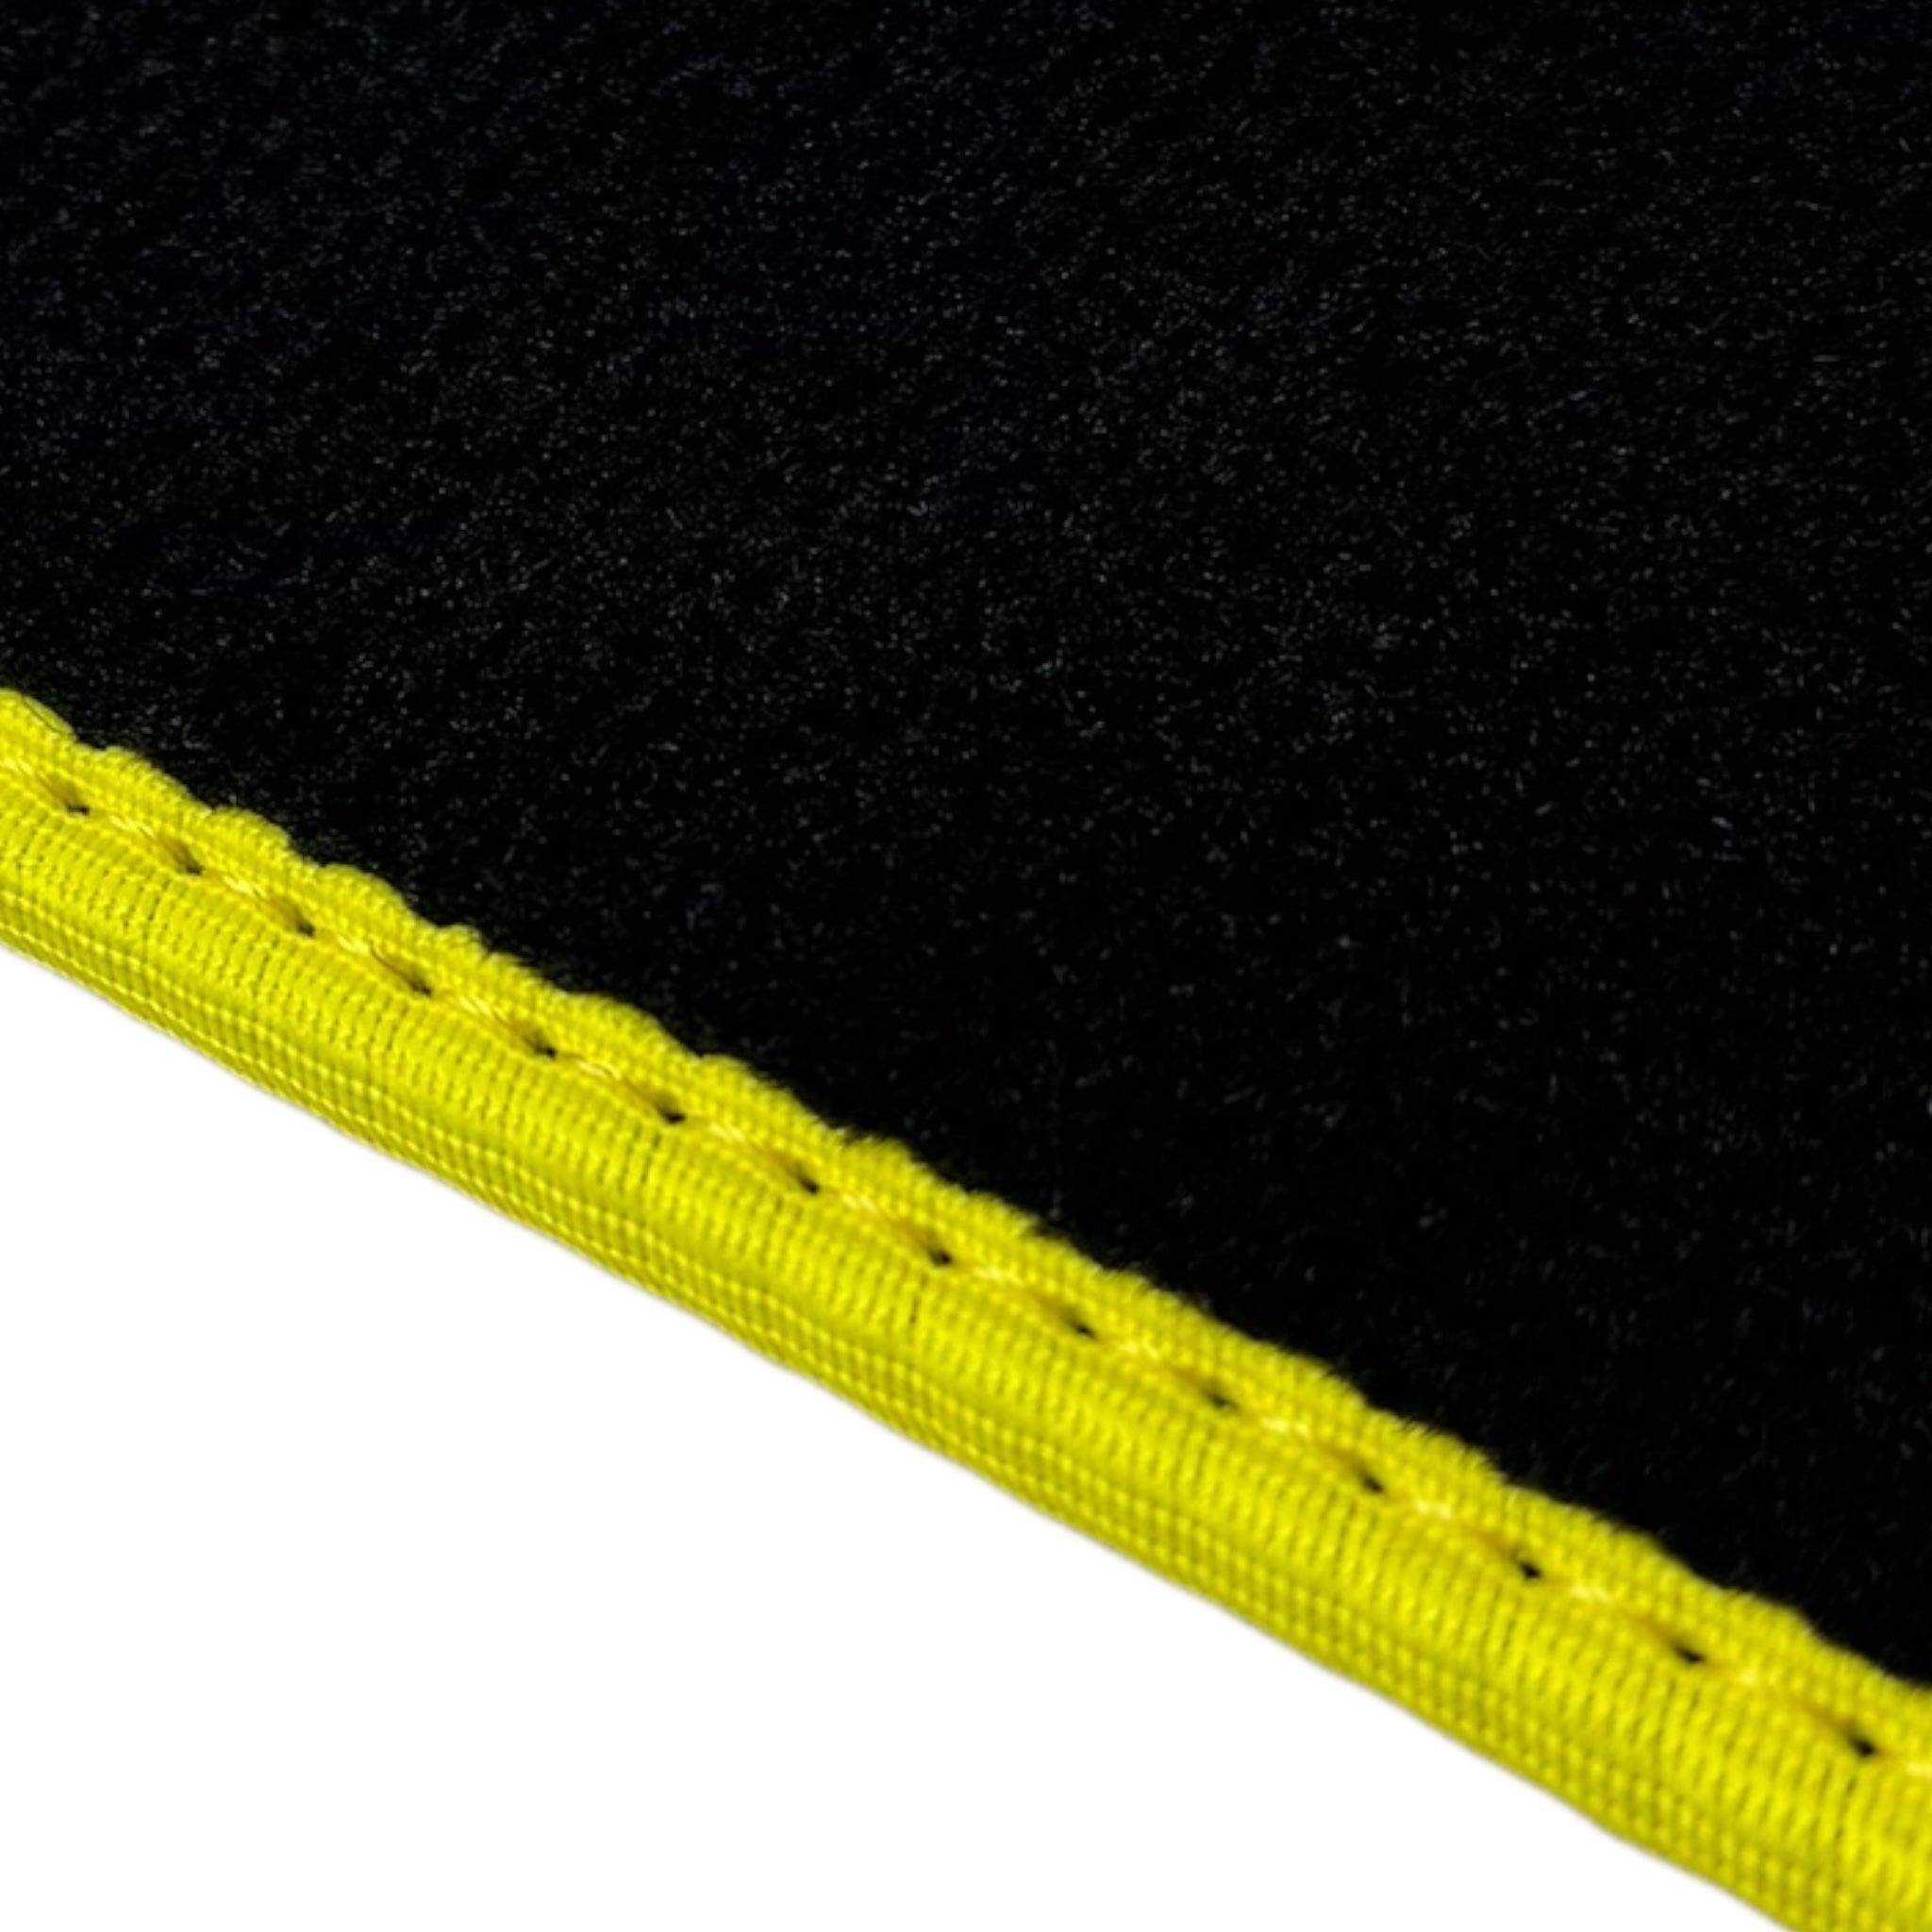 Black Floor Mats for Ferrari 360 Spider with Alcantara Leather | Yellow Trim - AutoWin